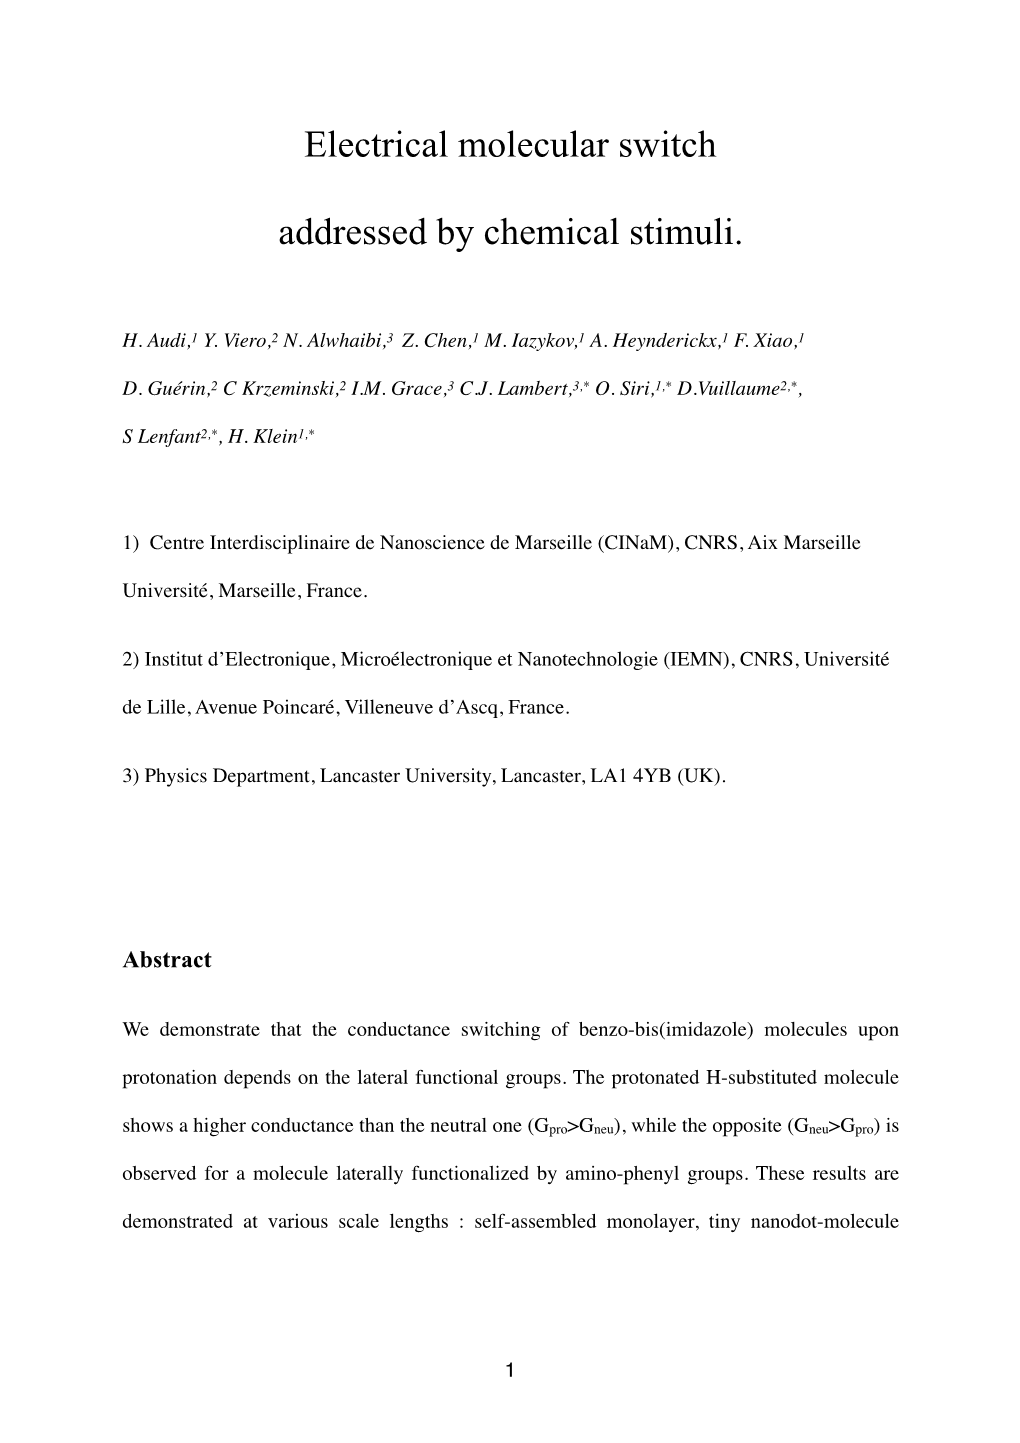 Electrical Molecular Switch Addressed by Chemical Stimuli